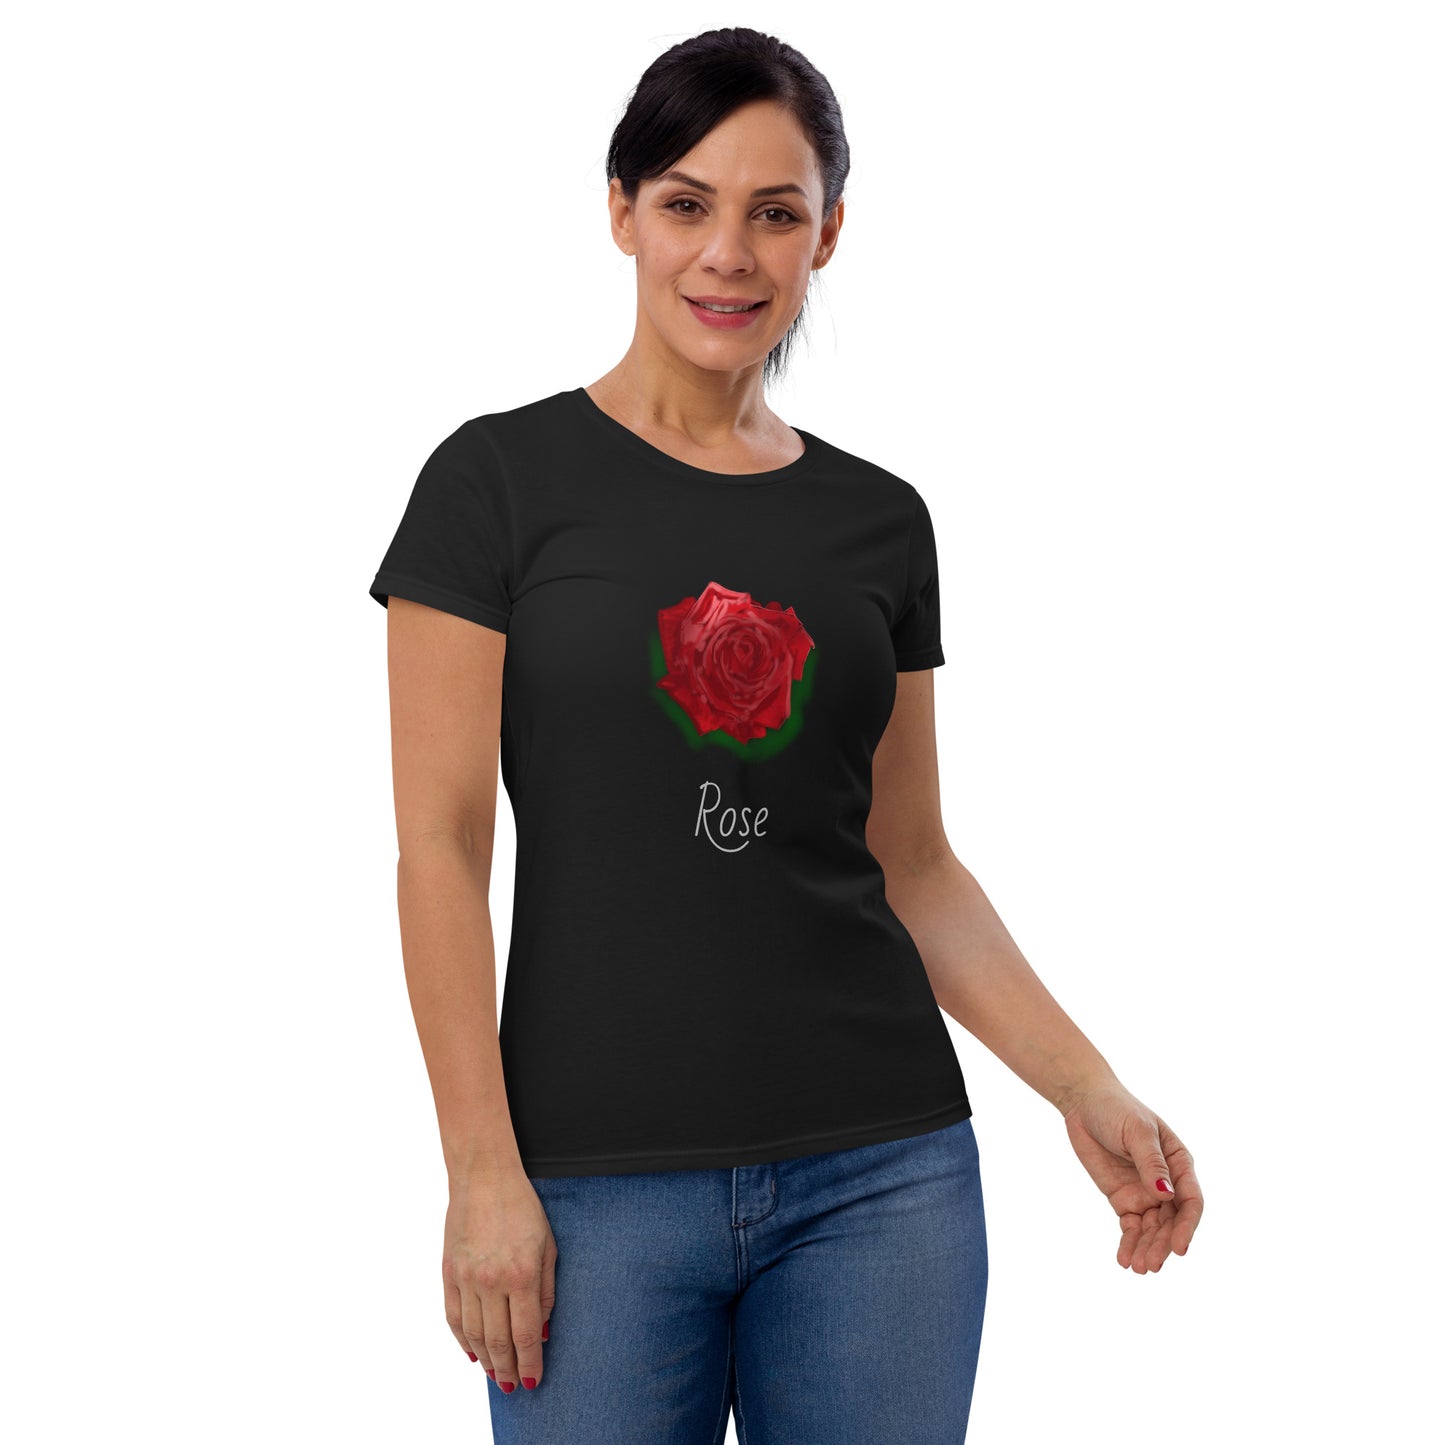 Flowers on Parade: Rose Women's short sleeve t-shirt